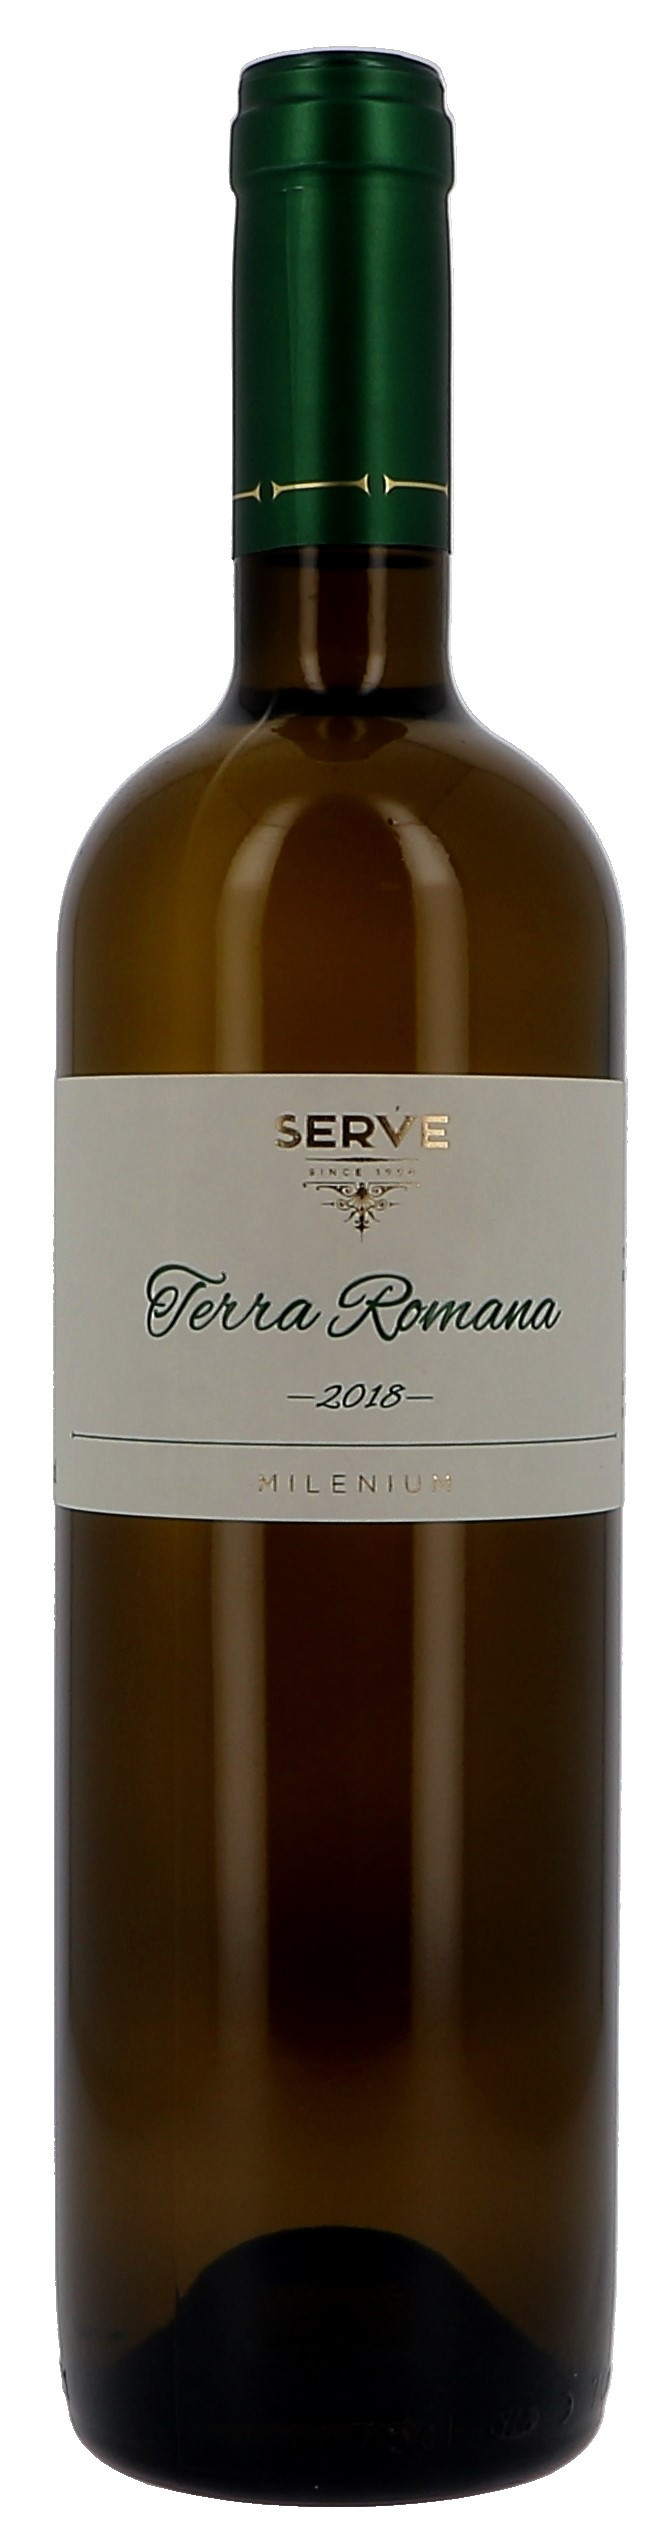 Serve Terra Romana Milenium Alb 75cl Roumanie Vin